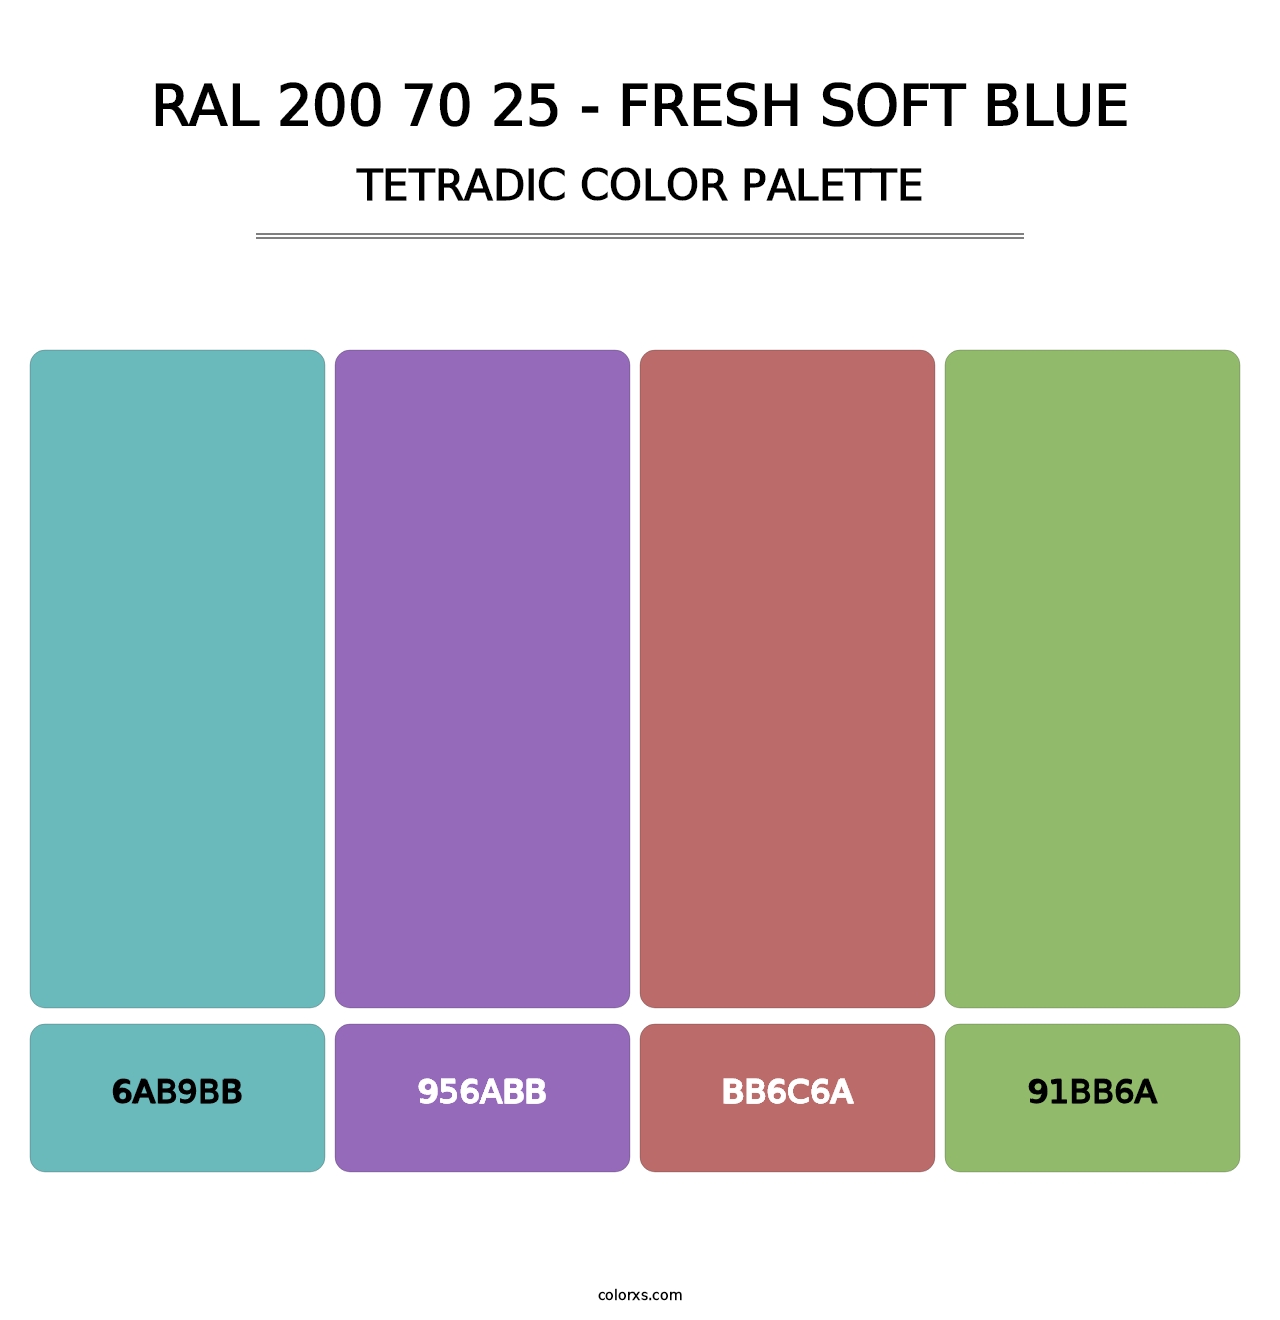 RAL 200 70 25 - Fresh Soft Blue - Tetradic Color Palette